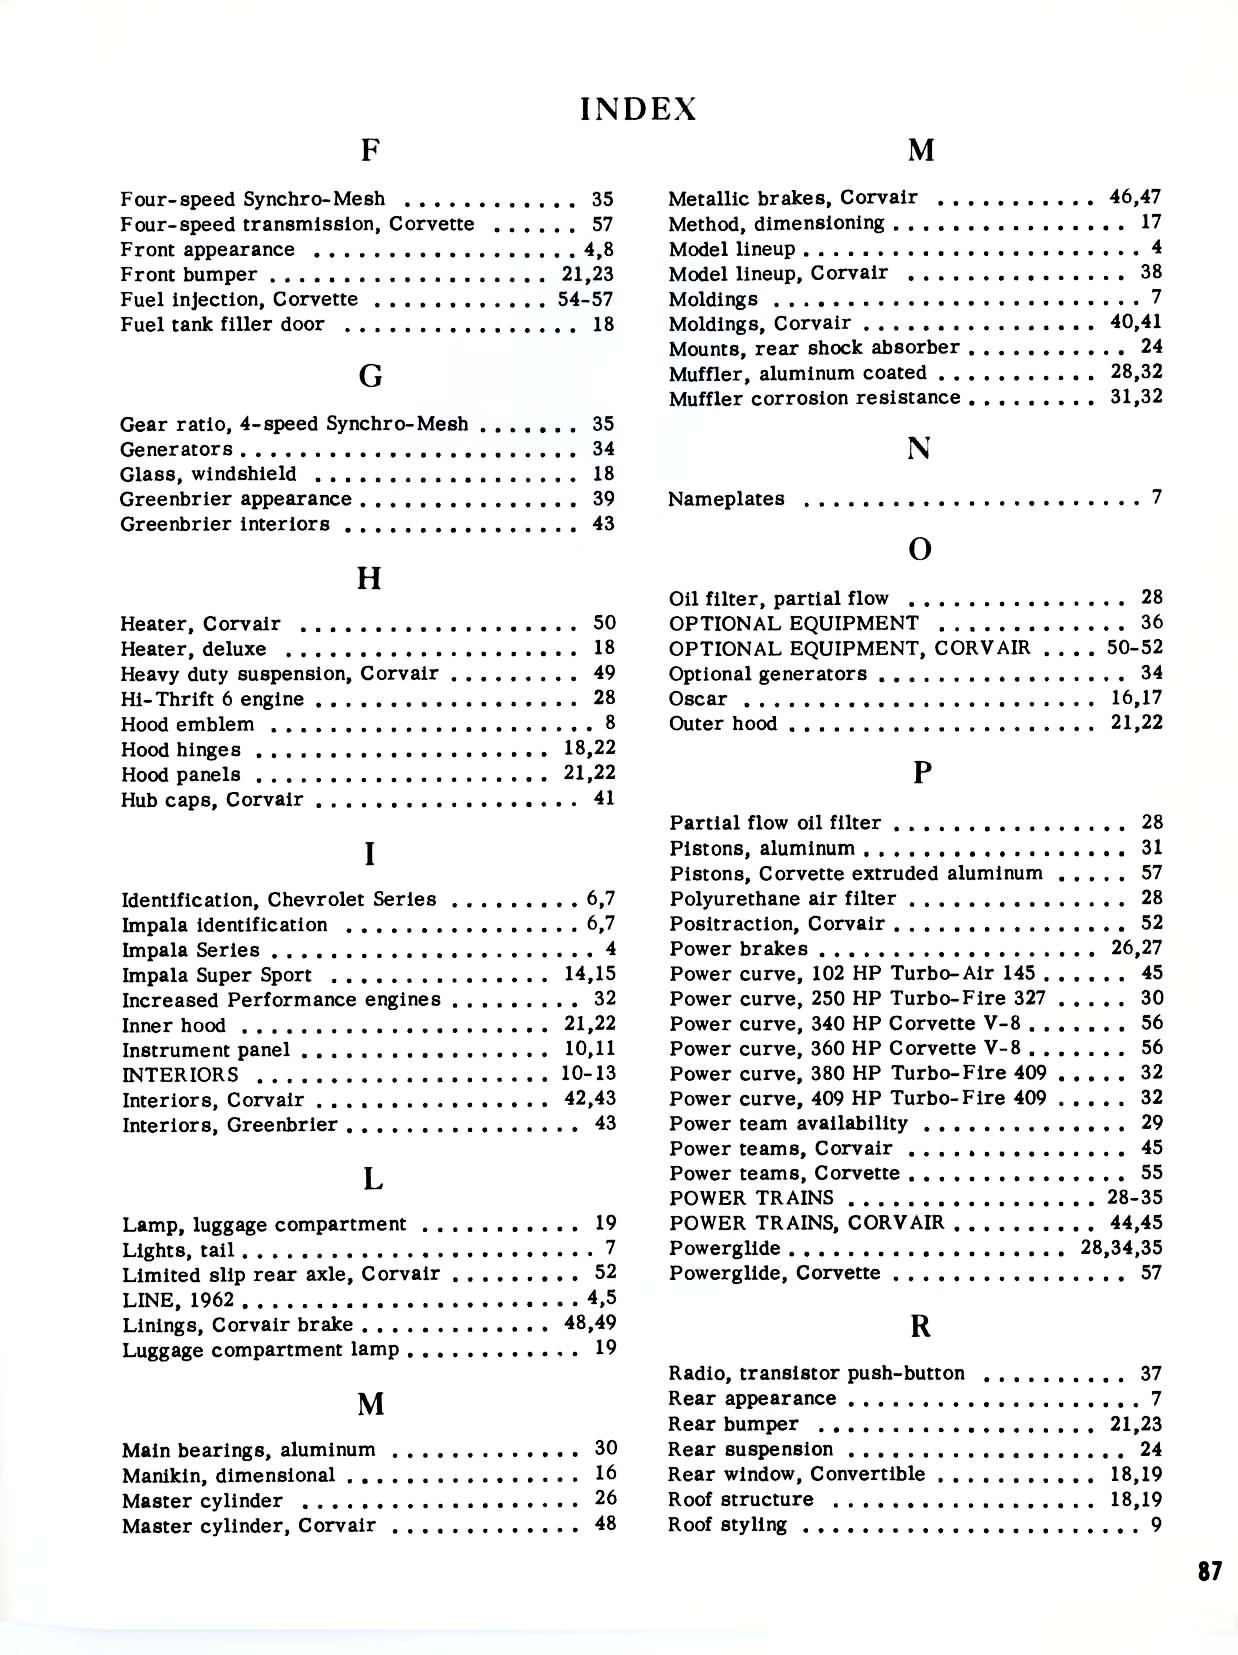 1962_Chevrolet_Engineering_Features-87